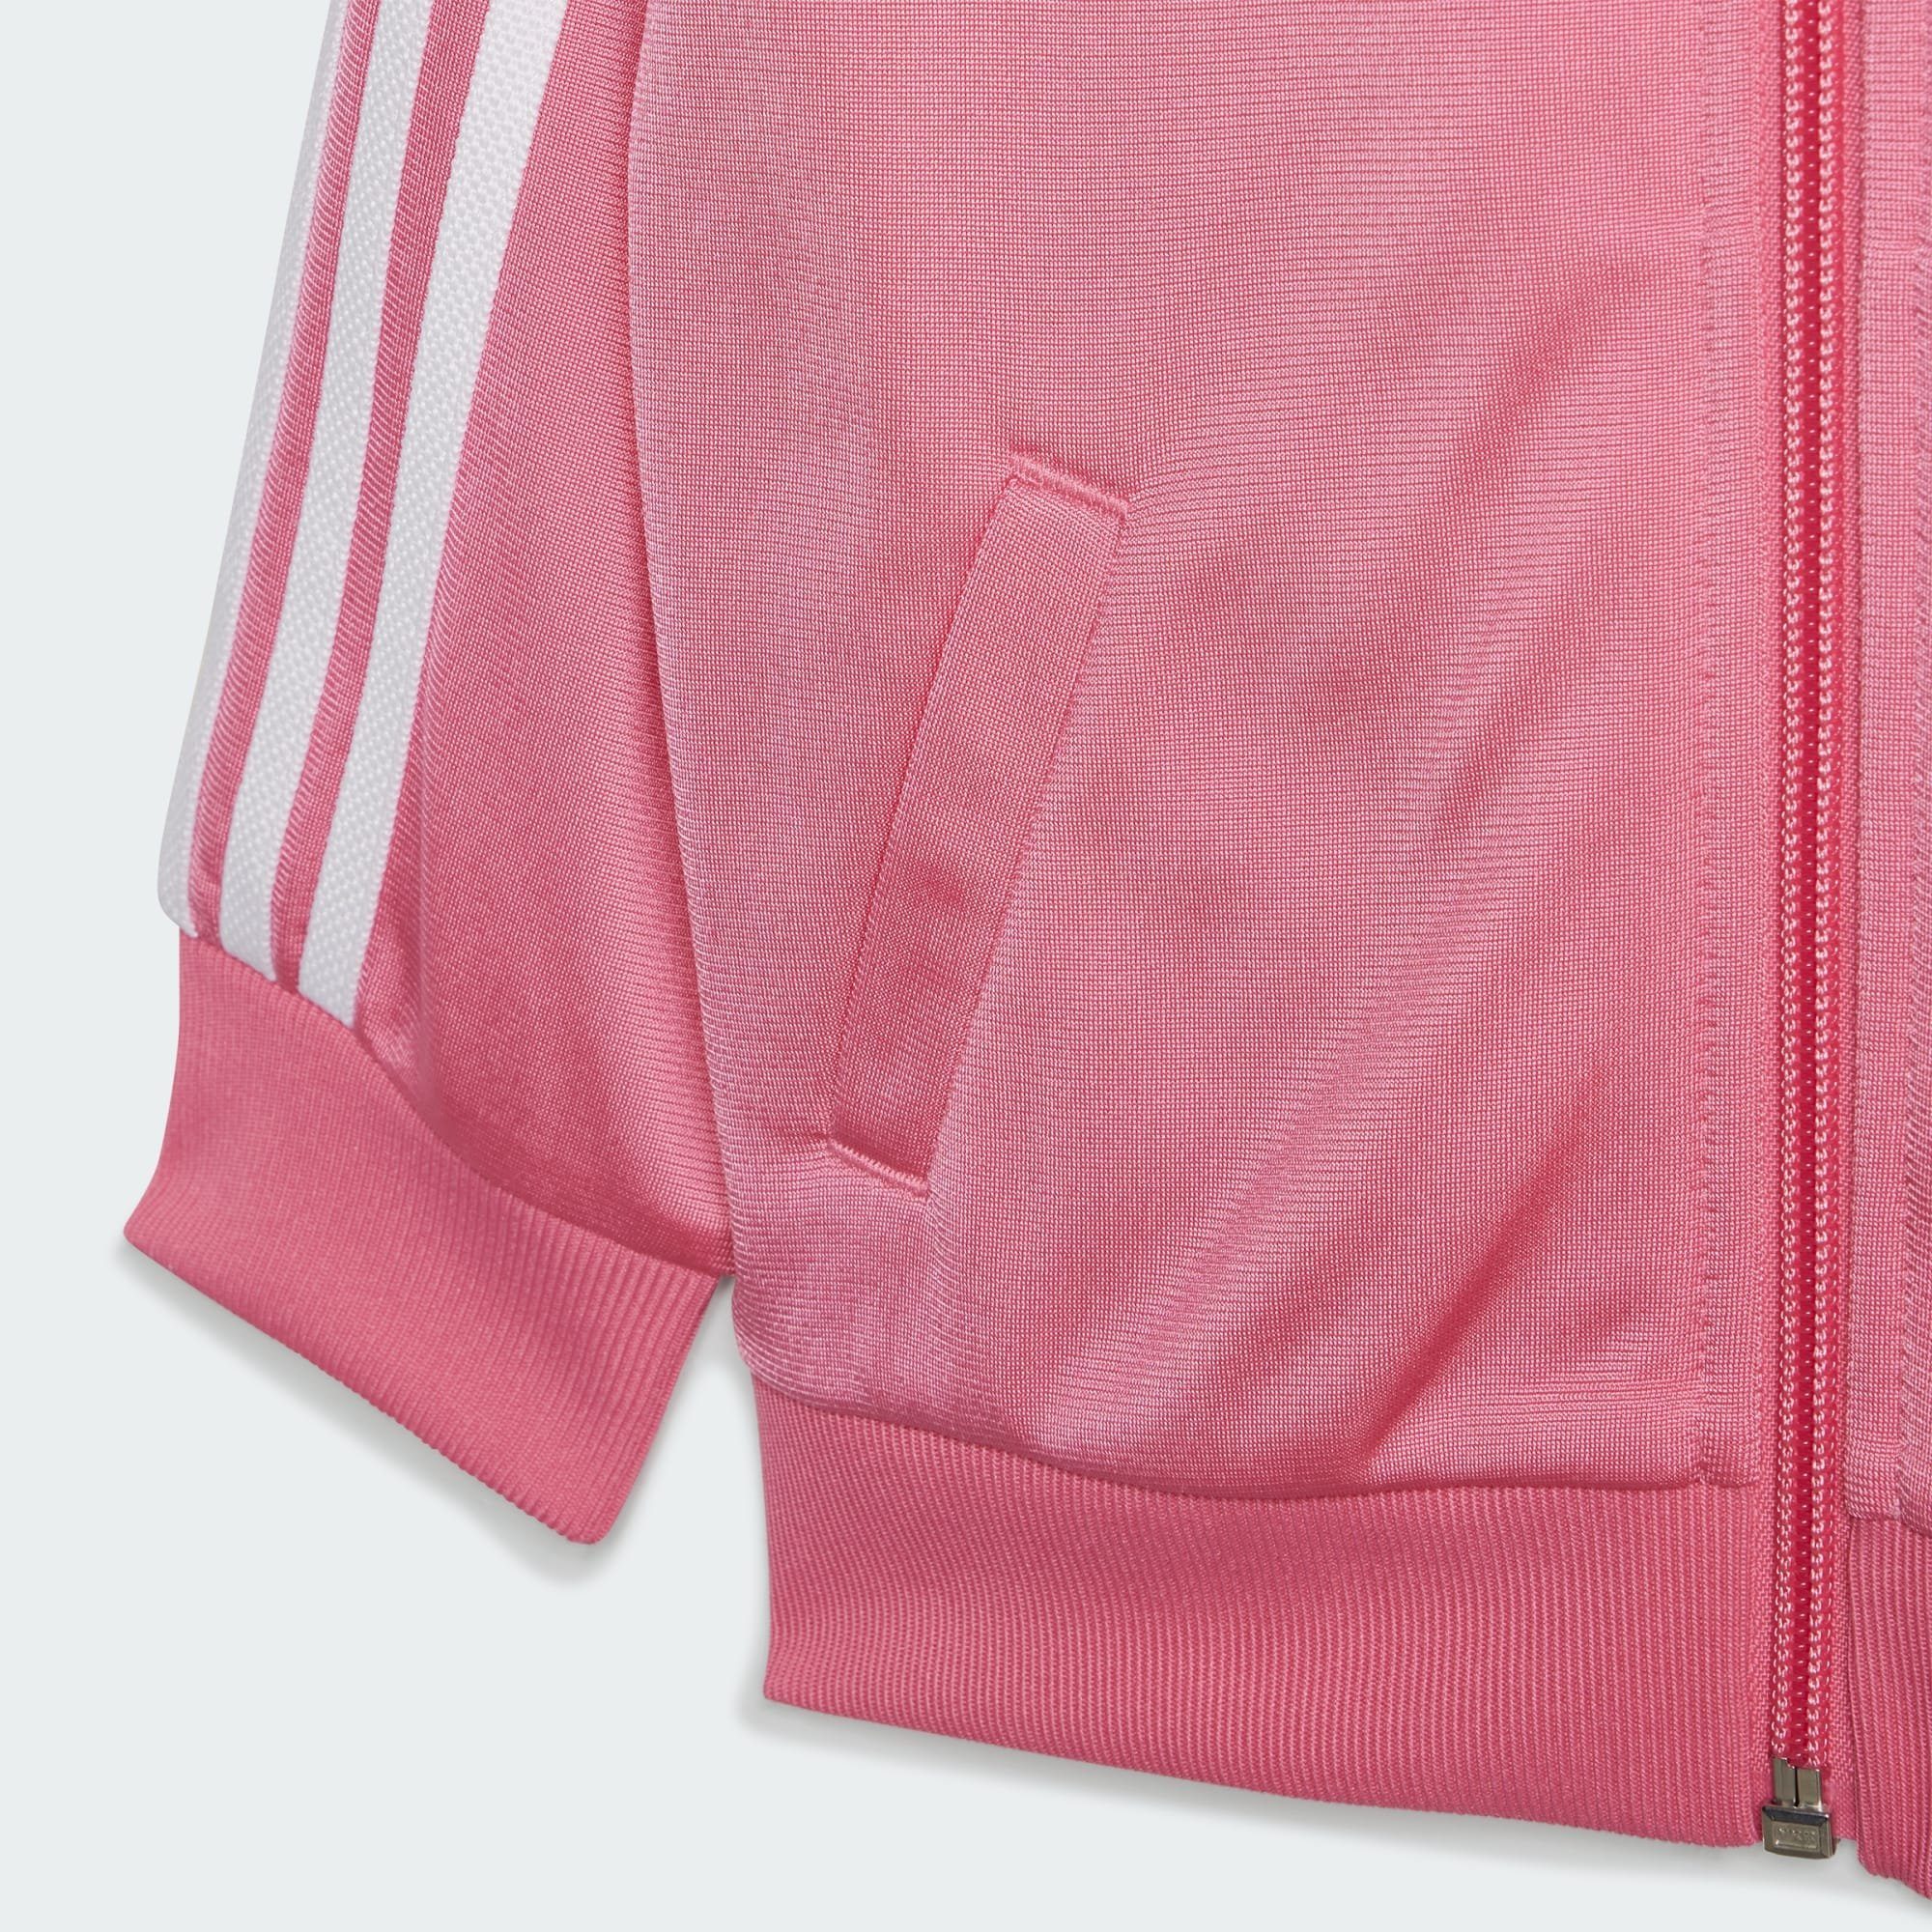 ADICOLOR SST adidas Pink Fusion Originals Sportanzug TRAININGSANZUG